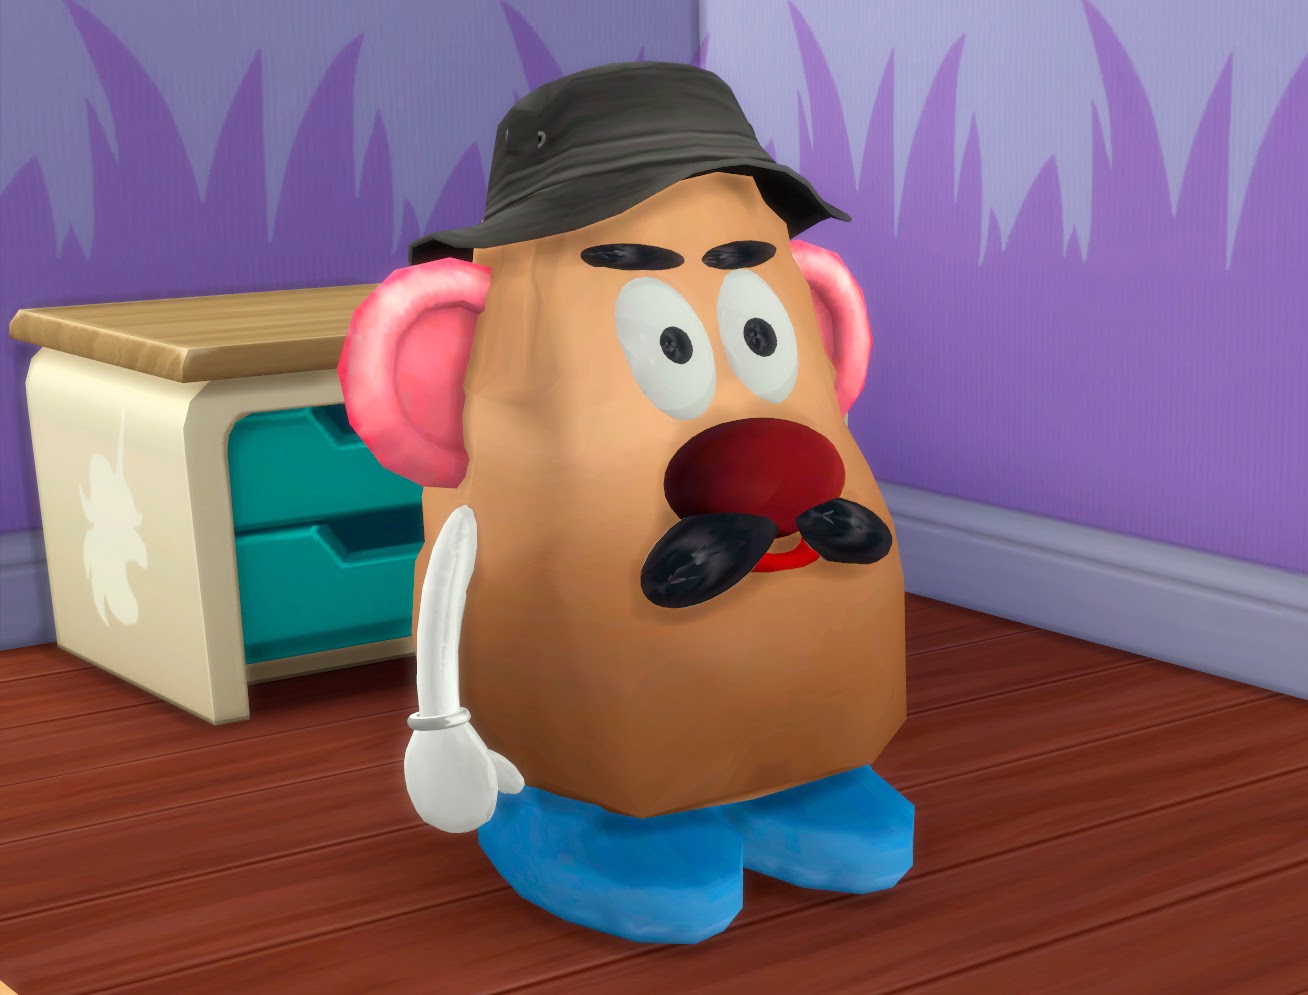 Mr potato. Мистер картошка. Мистер картофельная голова. Персонаж картошка. Картошка из истории игрушек.